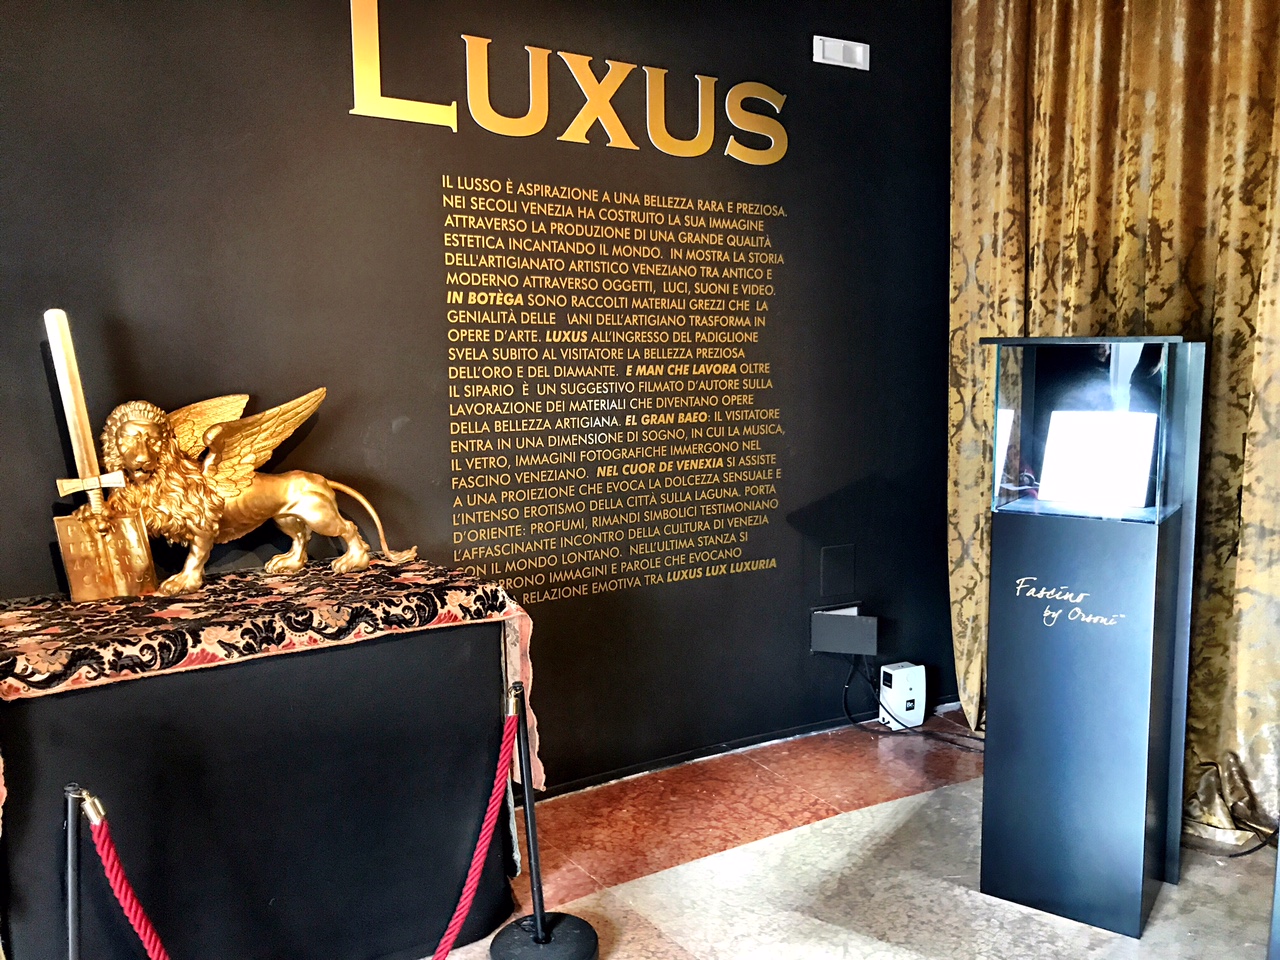 Luxus- Padiglione Venezia